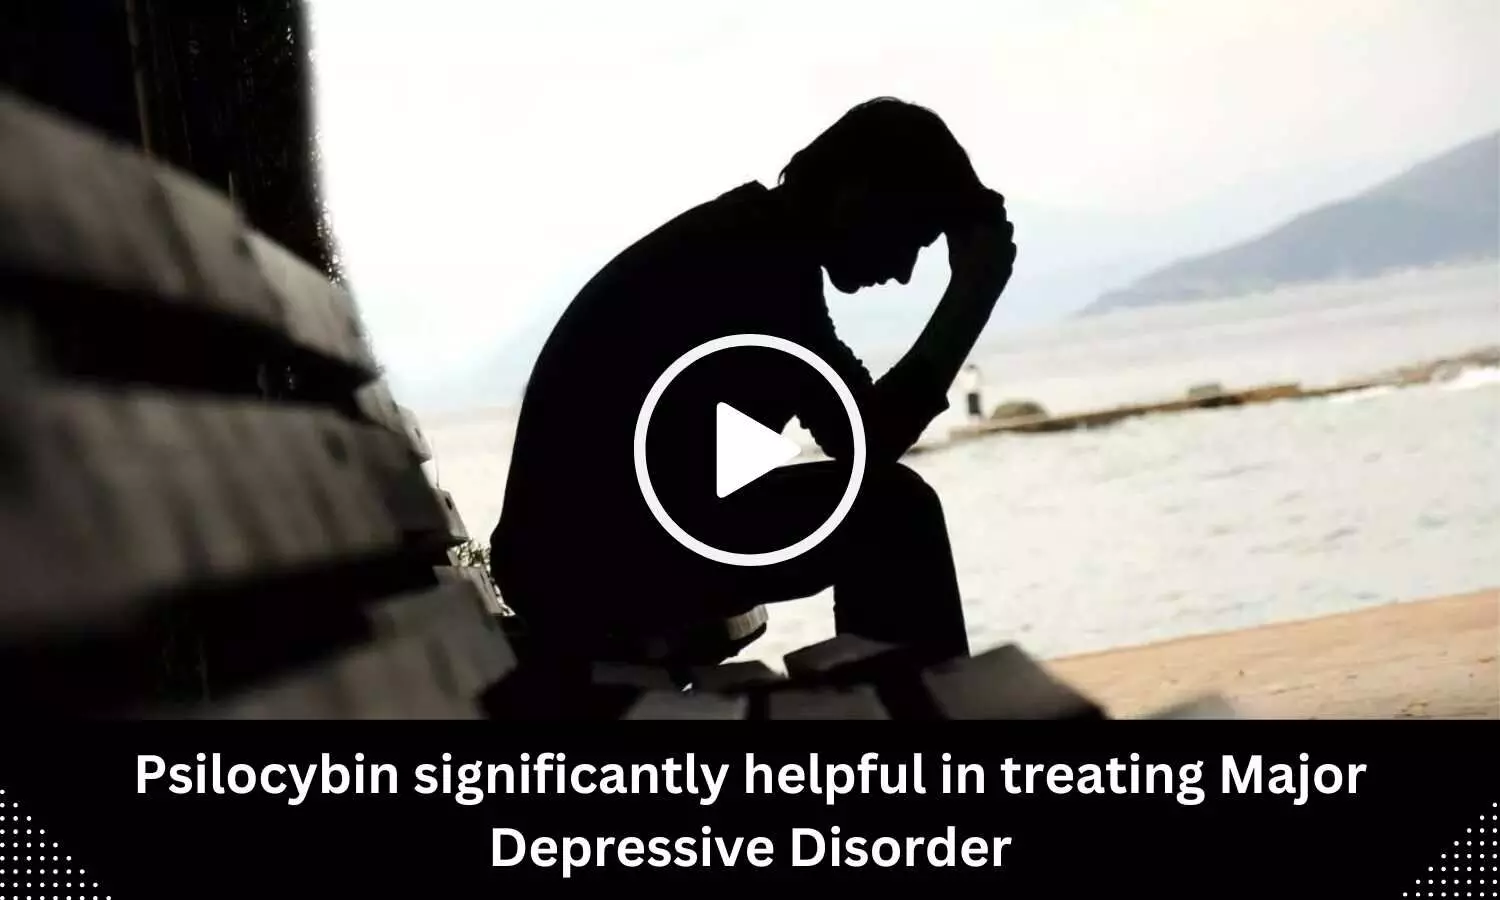 Psilocybin significantly helpful in treating Major Depressive Disorder